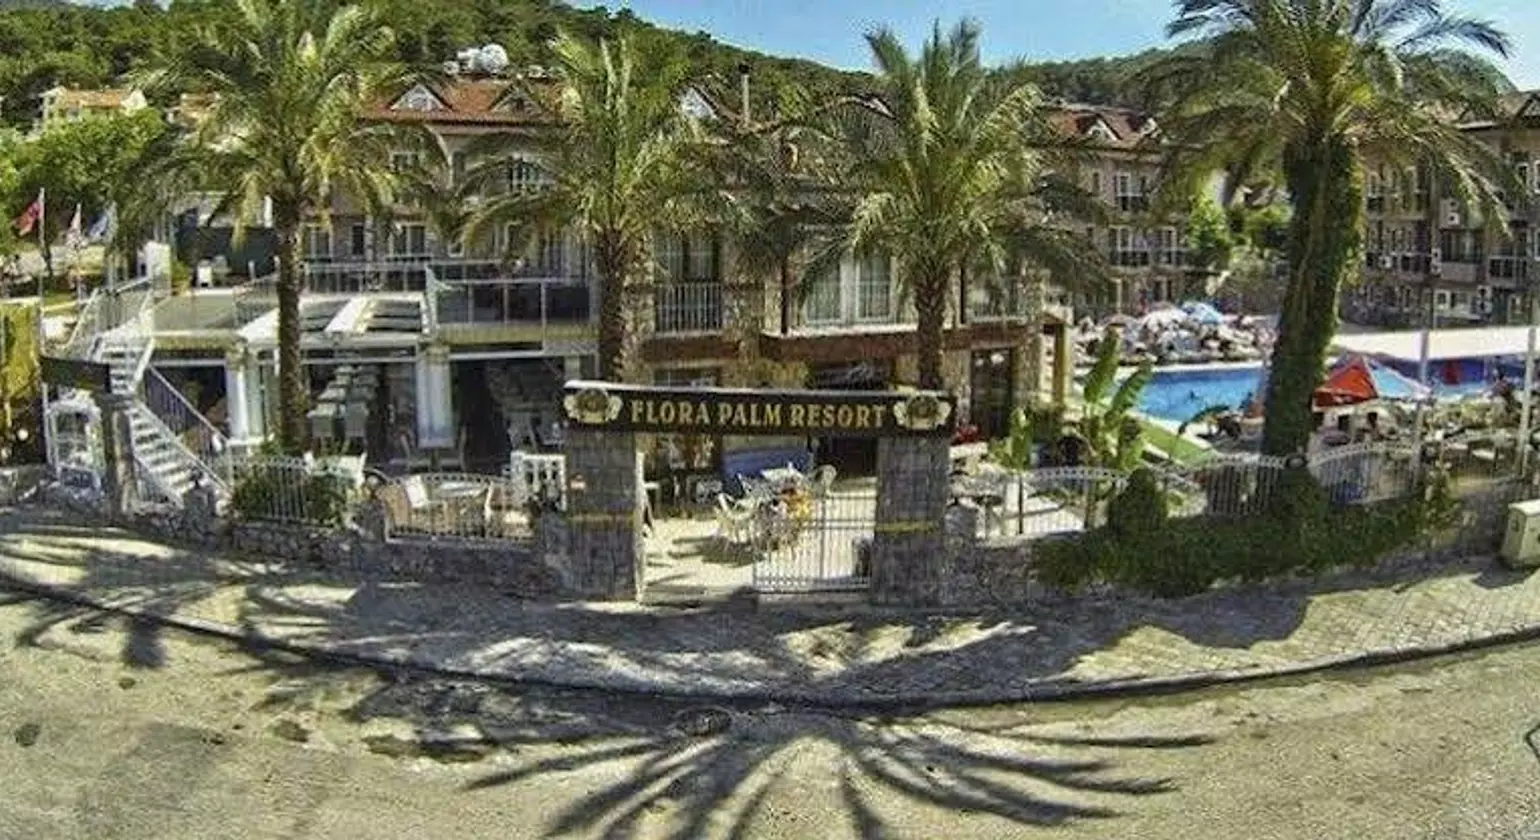 Flora Palm Resort